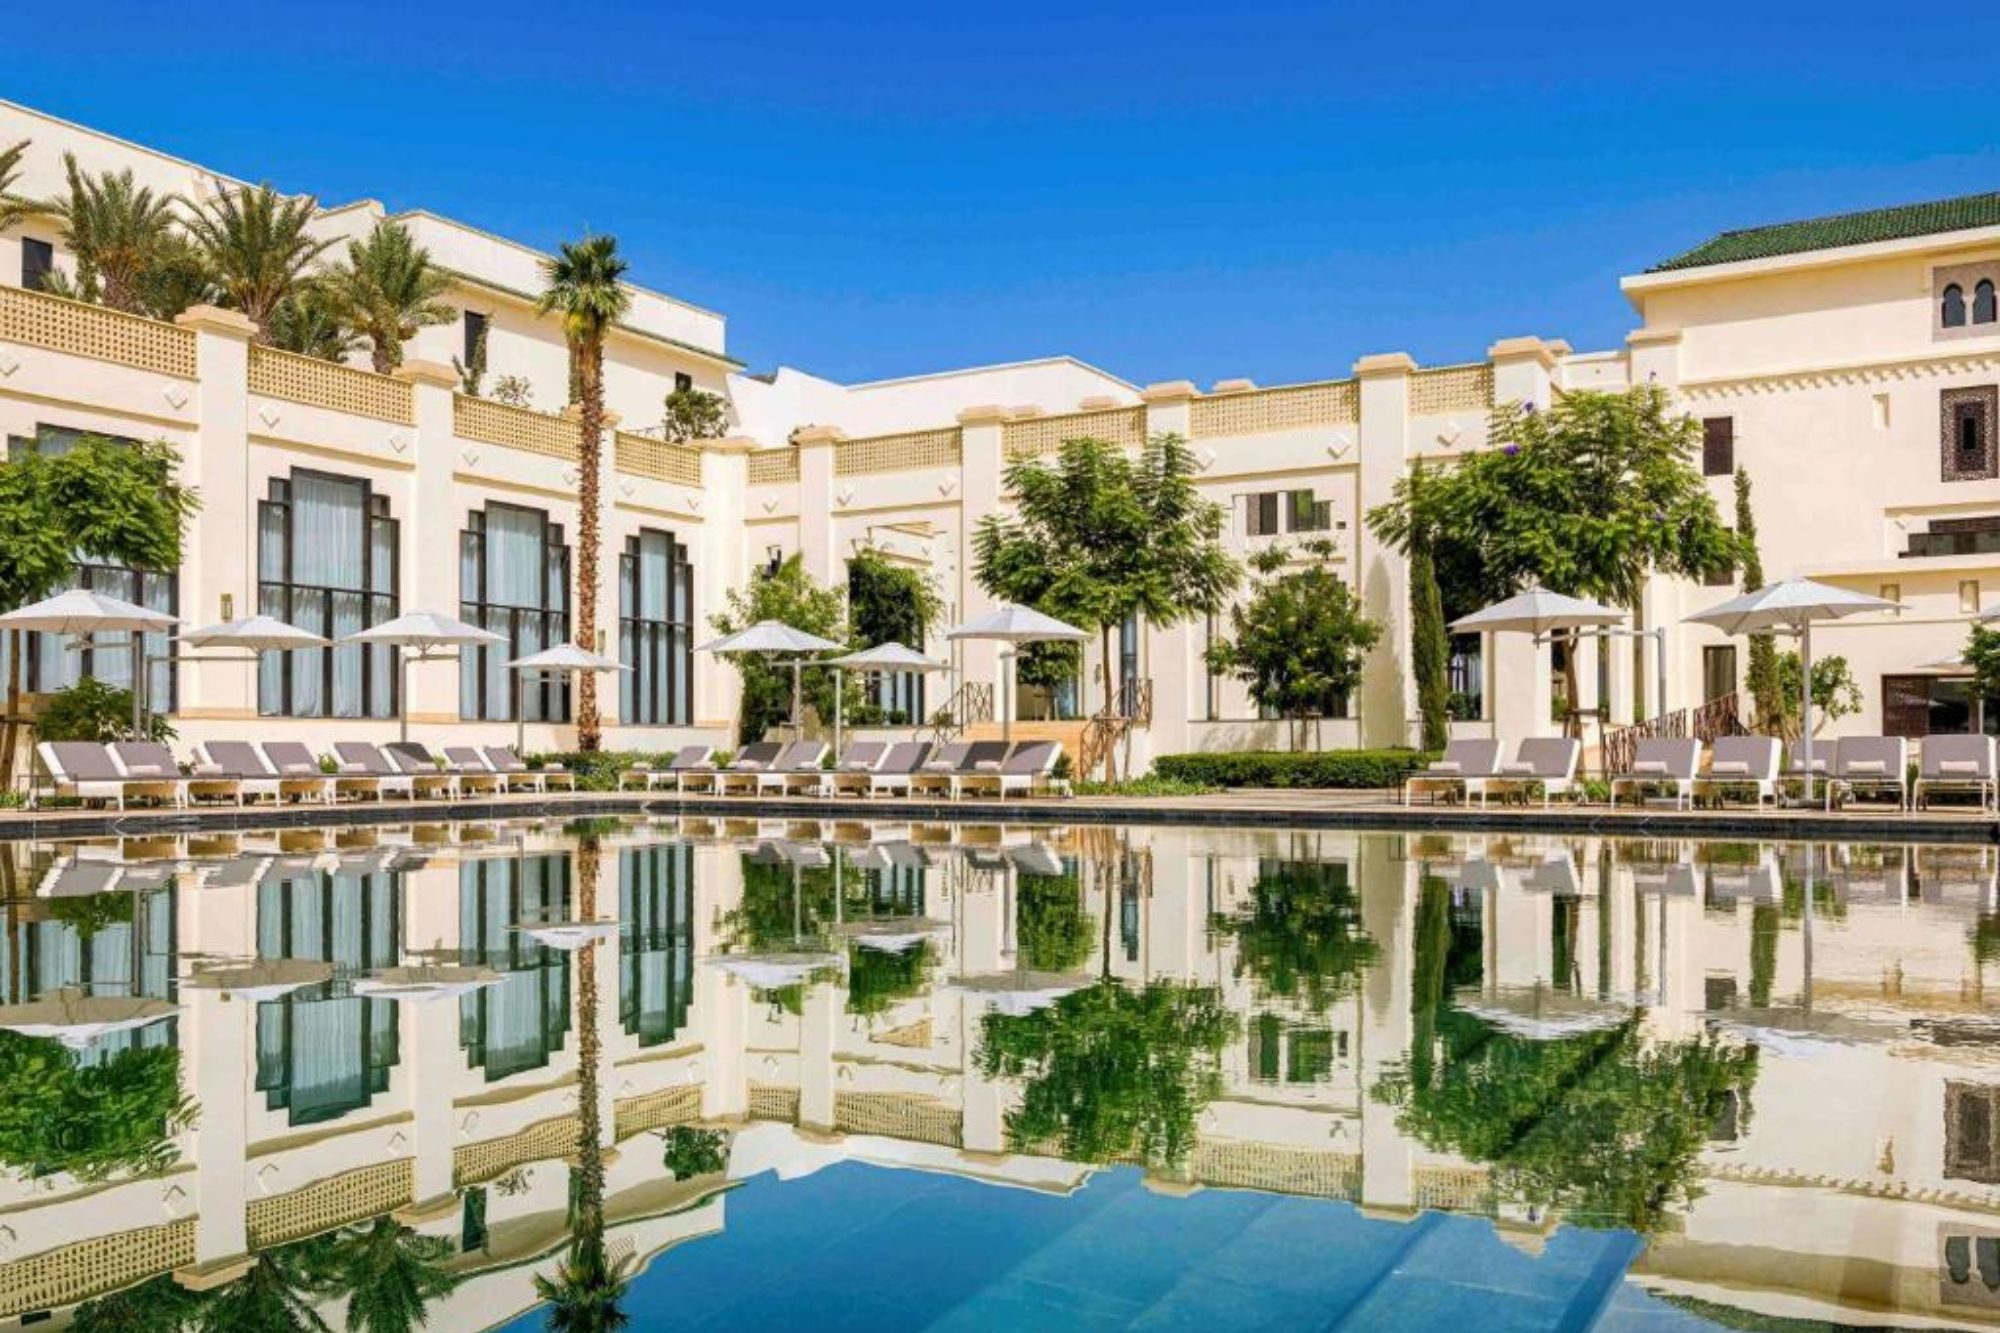 Fairmont Tazi Palace Tangier (2)